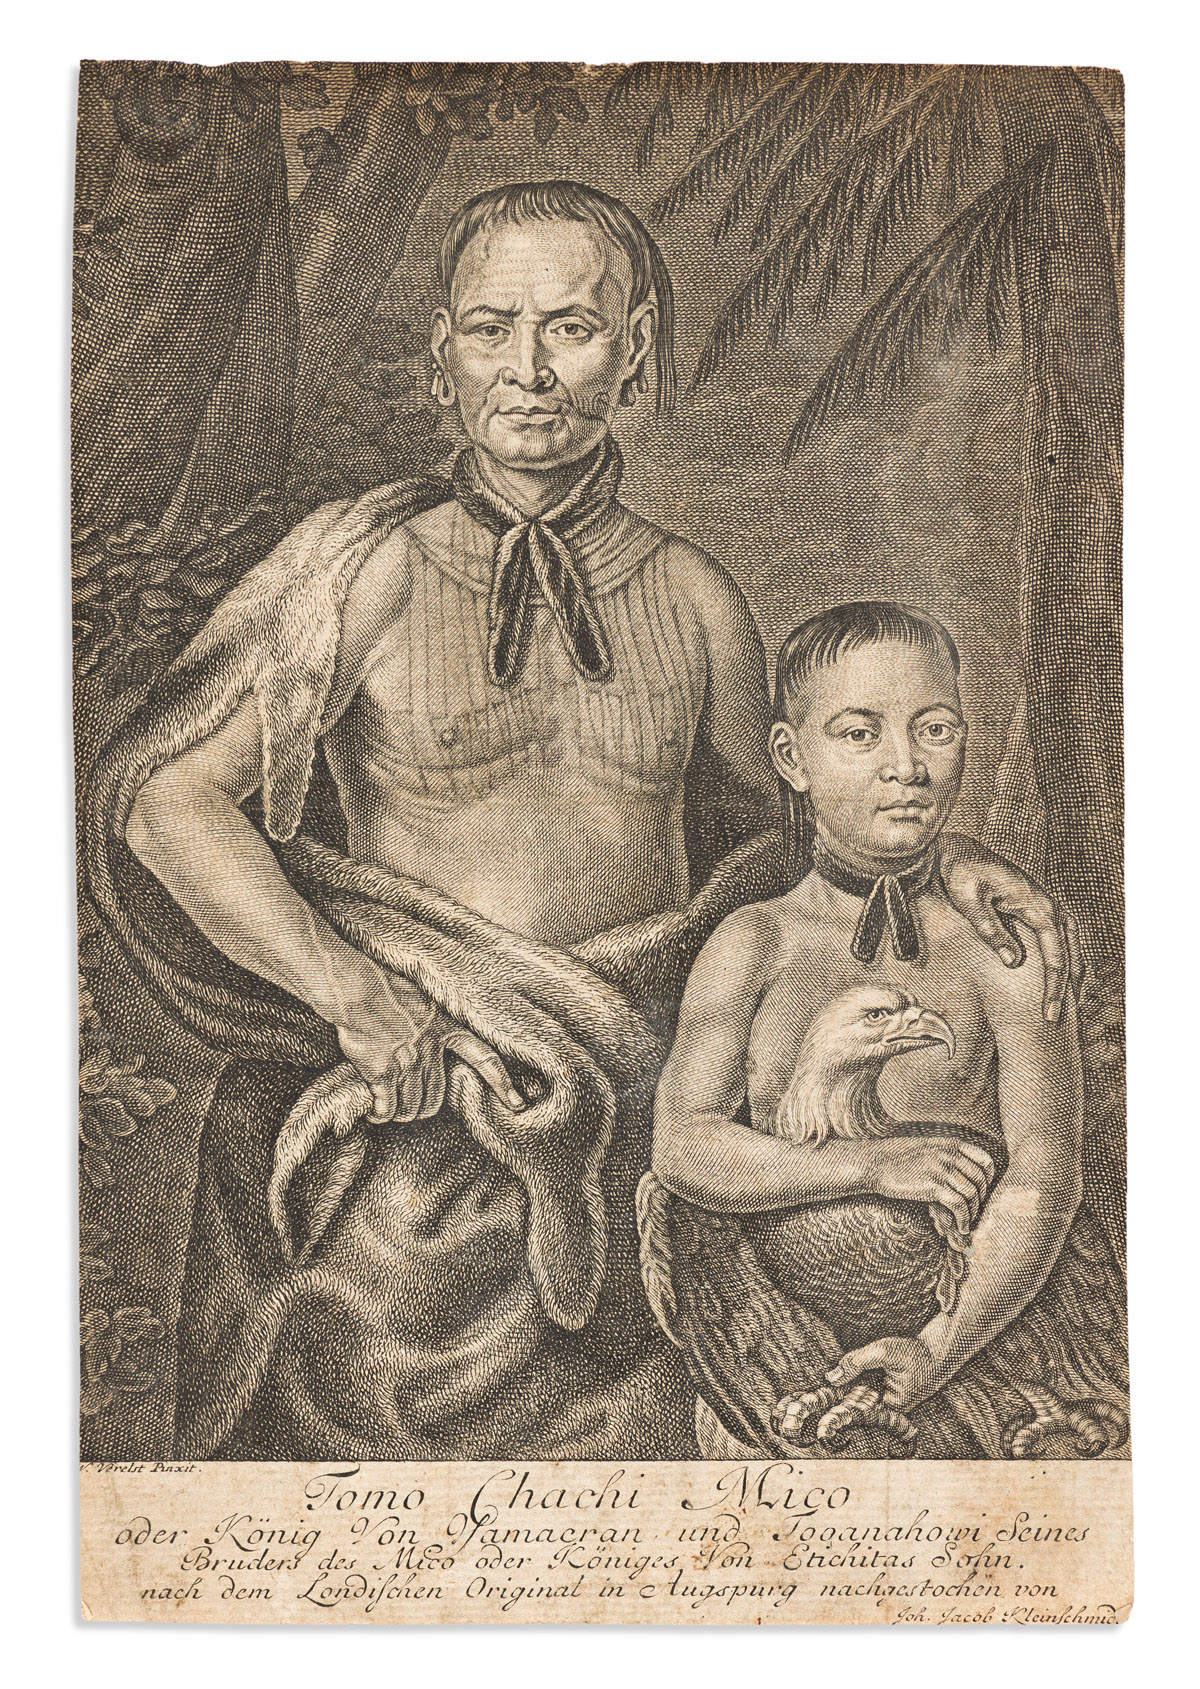 (AMERICAN INDIANS.) Johann Jacob Kleinschmidt, engraver. Tomo Chachi Mico oder König von Yamacran.